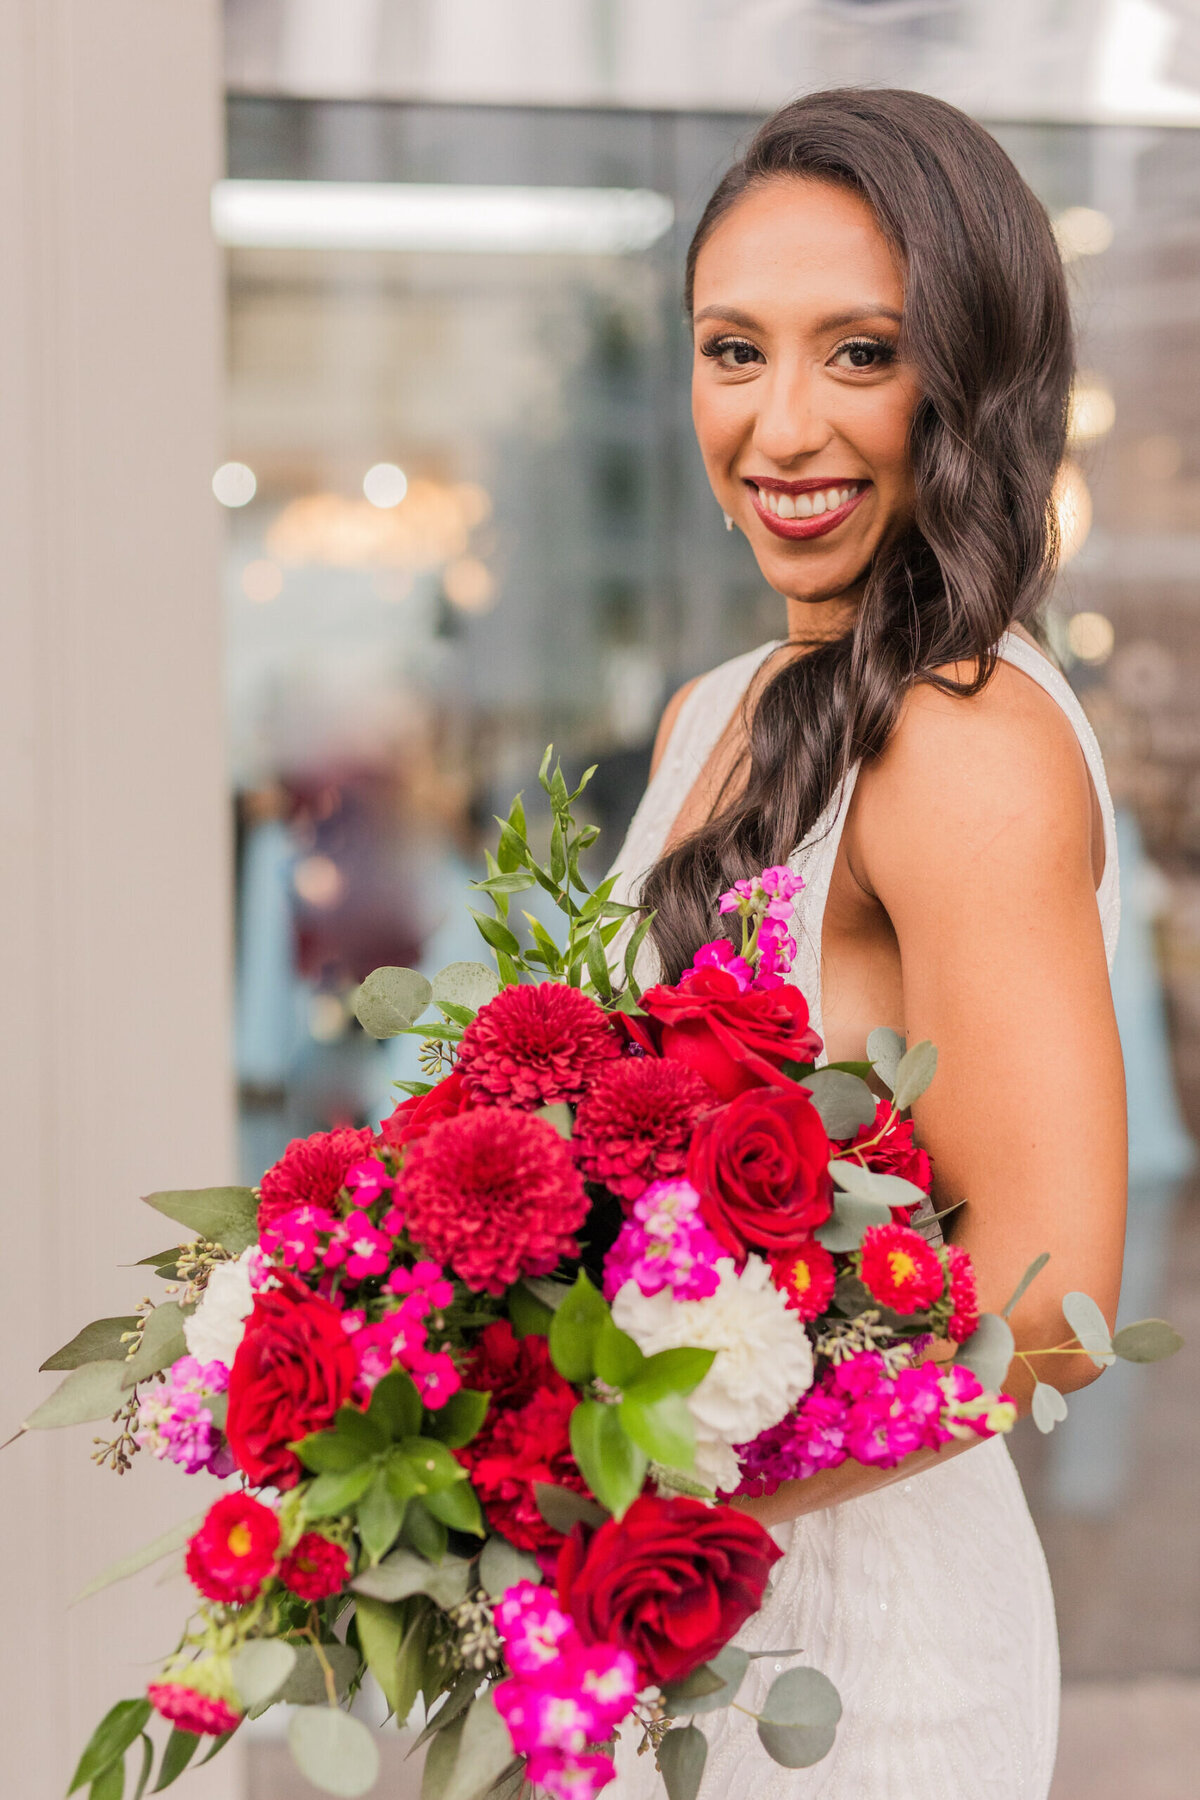 adriana_texas-old-town-austin-wedding-florist-33-scaled (1)